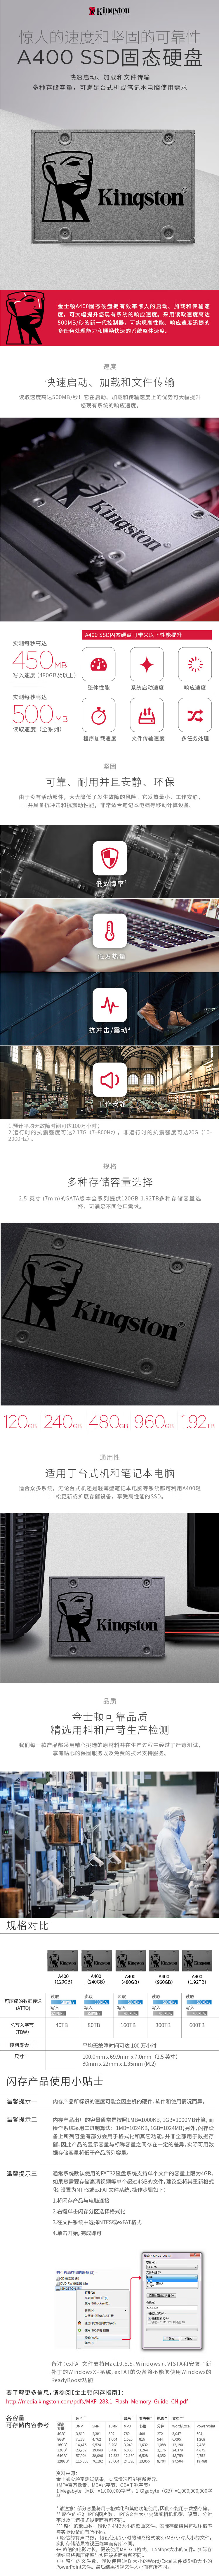 FireShot Capture 273 - 【金士顿A400系列 960G】金士顿(Kingston) 960GB SSD固态硬盘 SATA3.0接口 A400系列 读速高达500M_ - item.jd.com.png